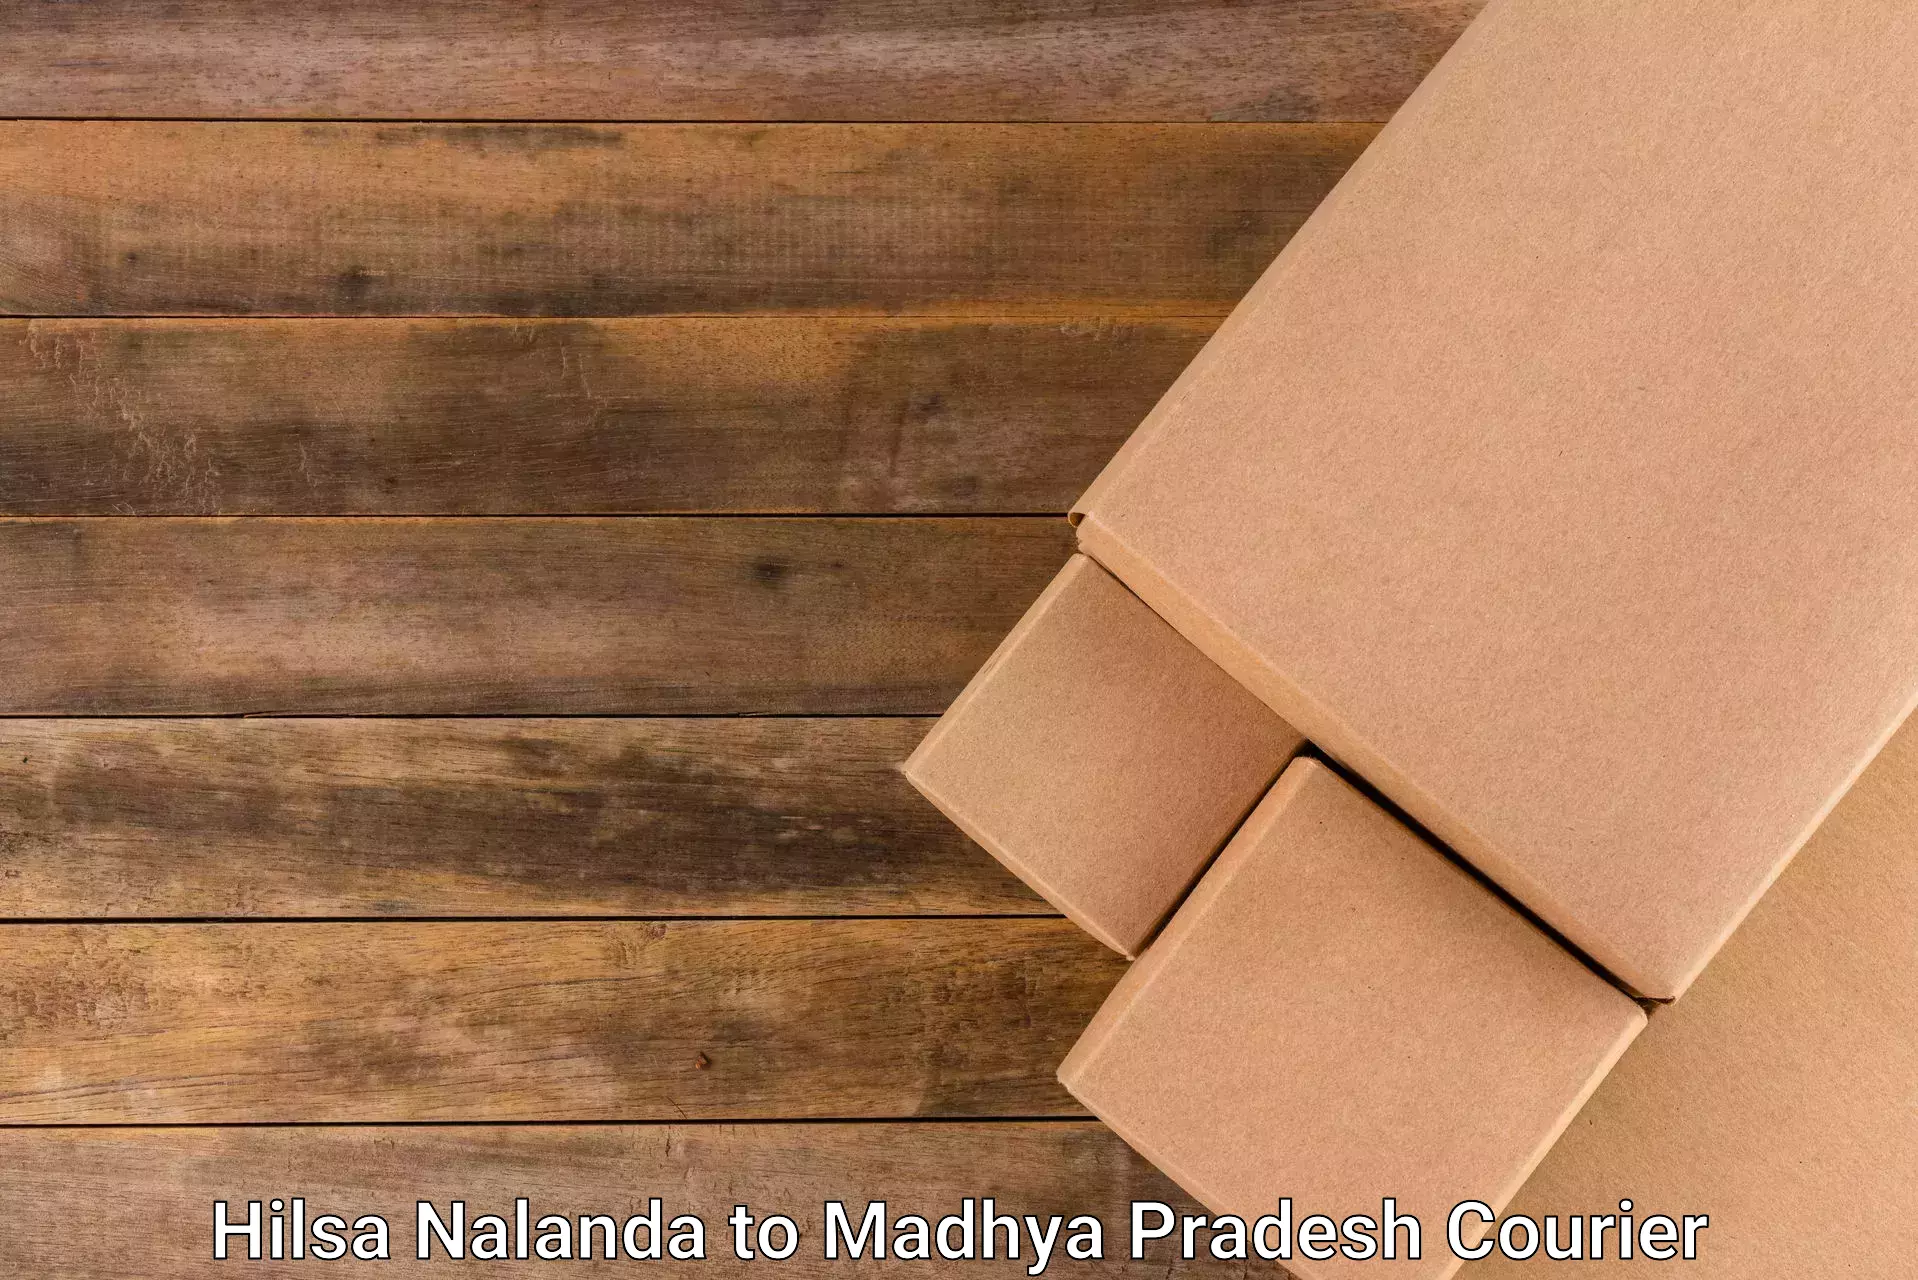 International parcel service Hilsa Nalanda to Chhatarpur